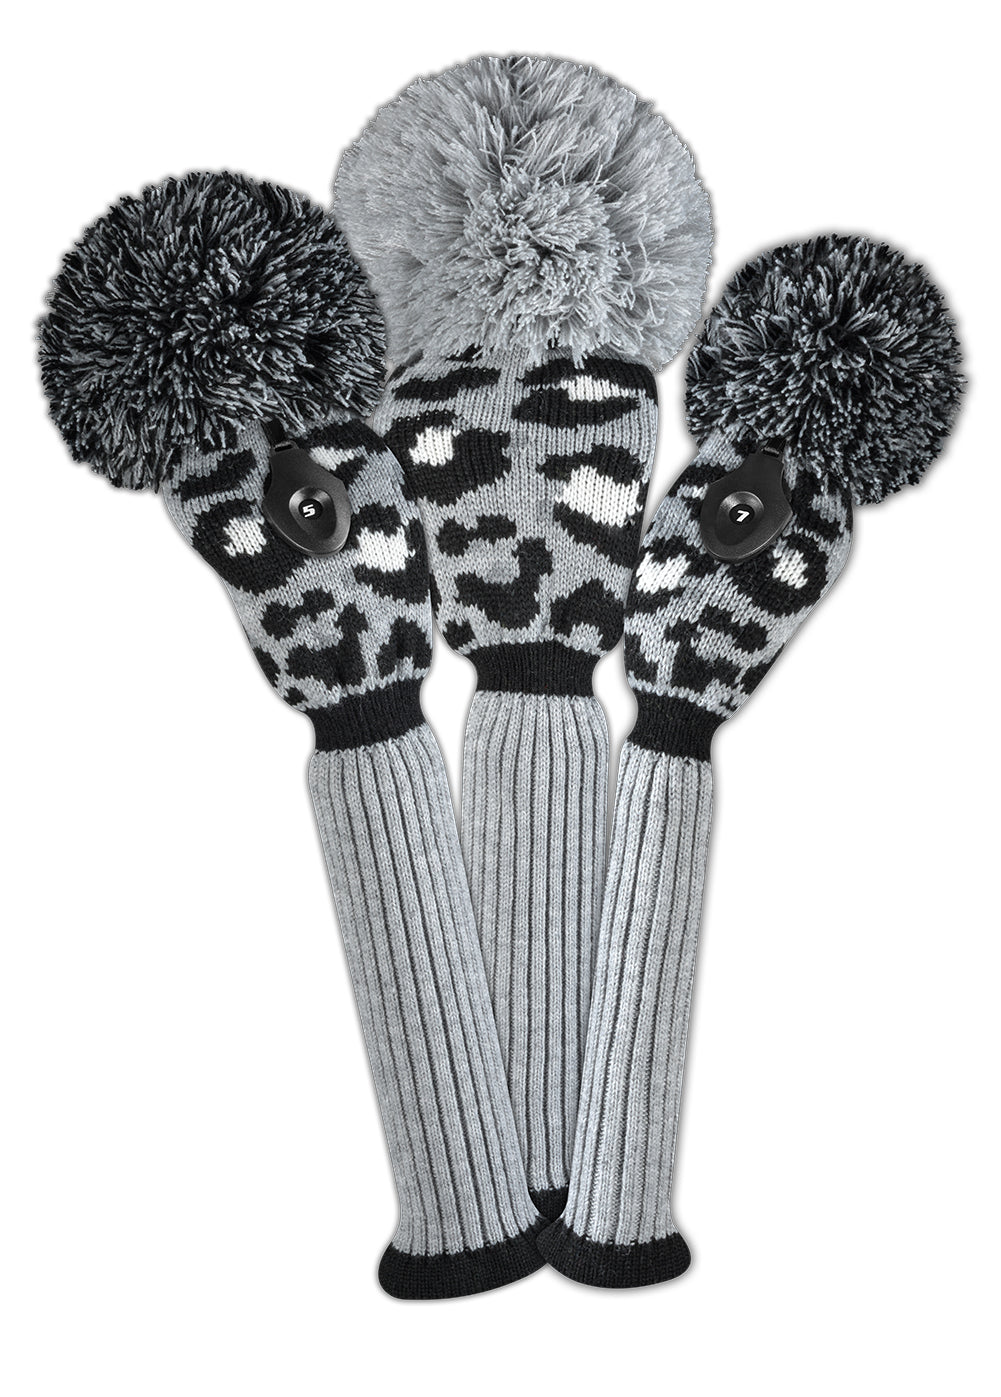 Leopard Head Cover Set - Gray, Black, White